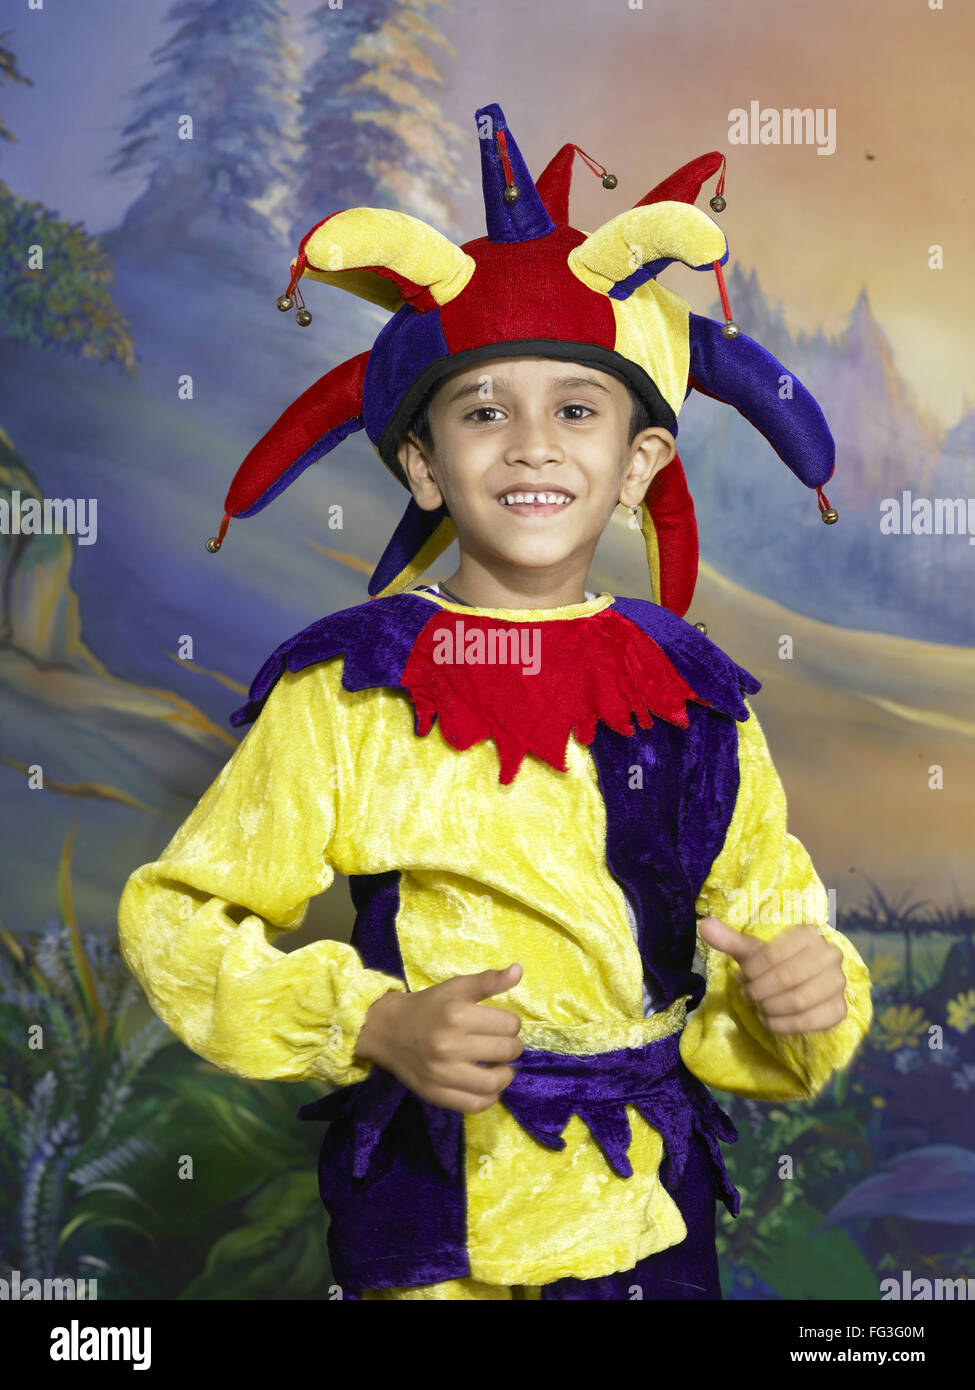 Asia meridional indio vestido como joker realizar Fancy Dress competencia  en etapa preescolar señor Fotografía de stock - Alamy